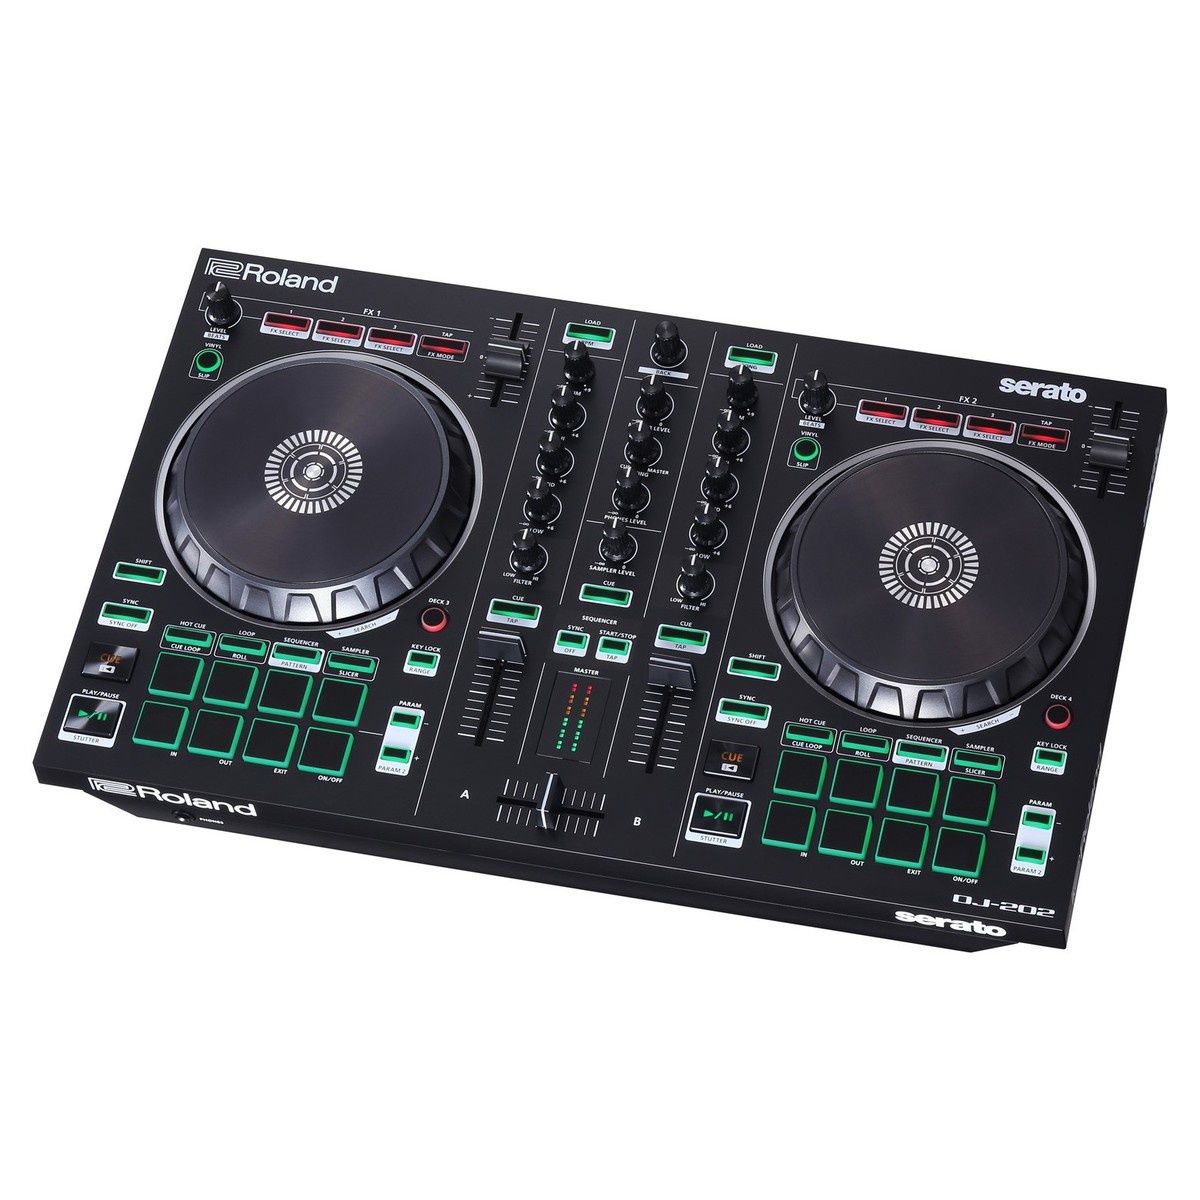 Kontroler DJ Roland DJ 202 jak nowy ideal serato konsola dj mixer